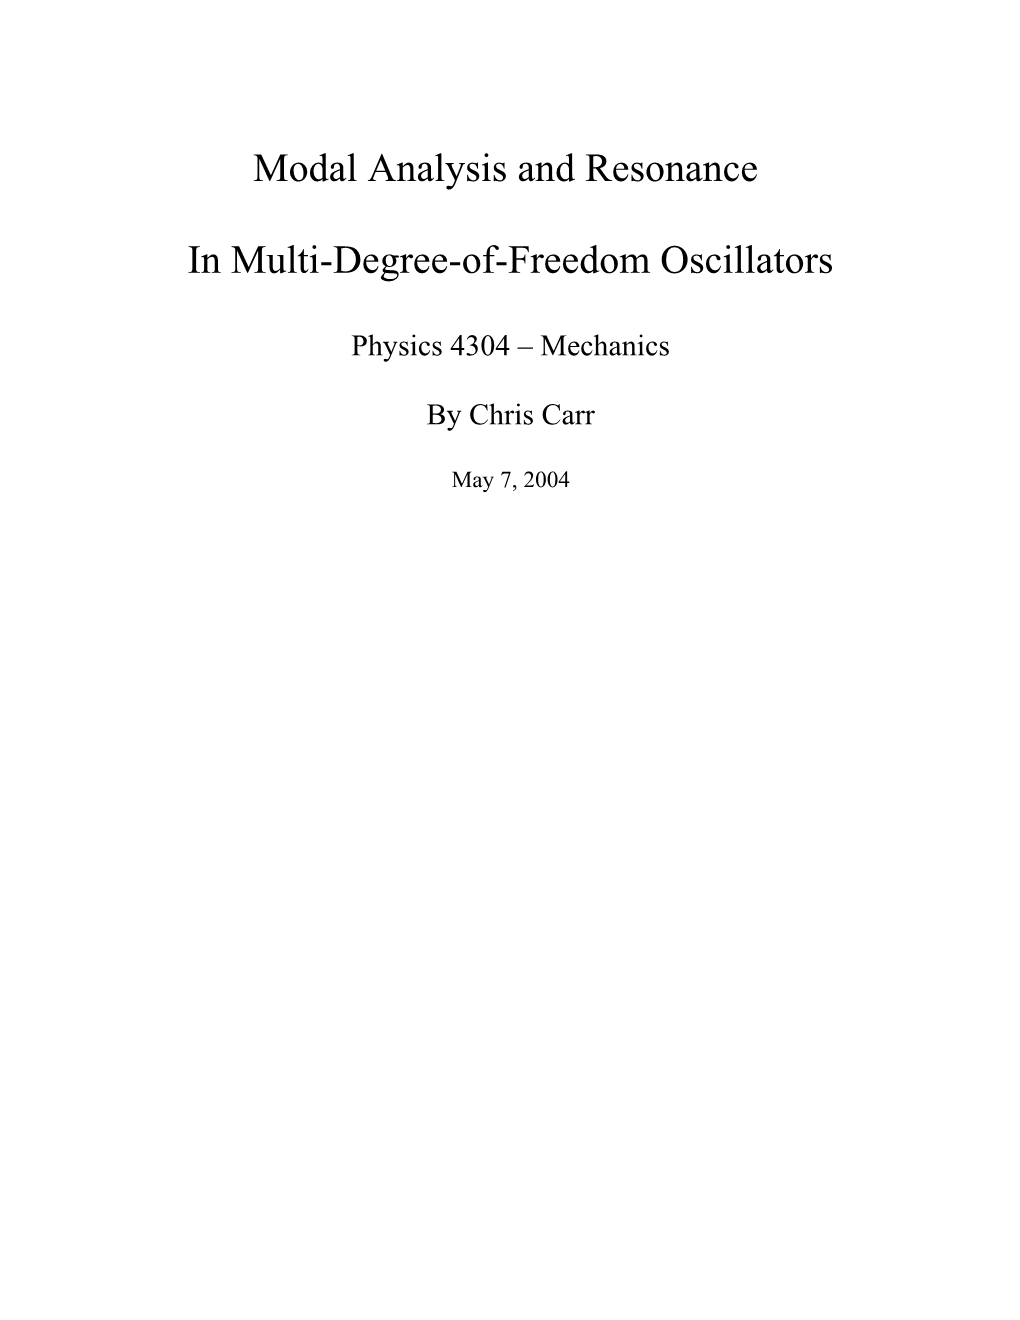 Modal Analysis and Resonance in Multi-Degree-Of-Freedom Oscillators